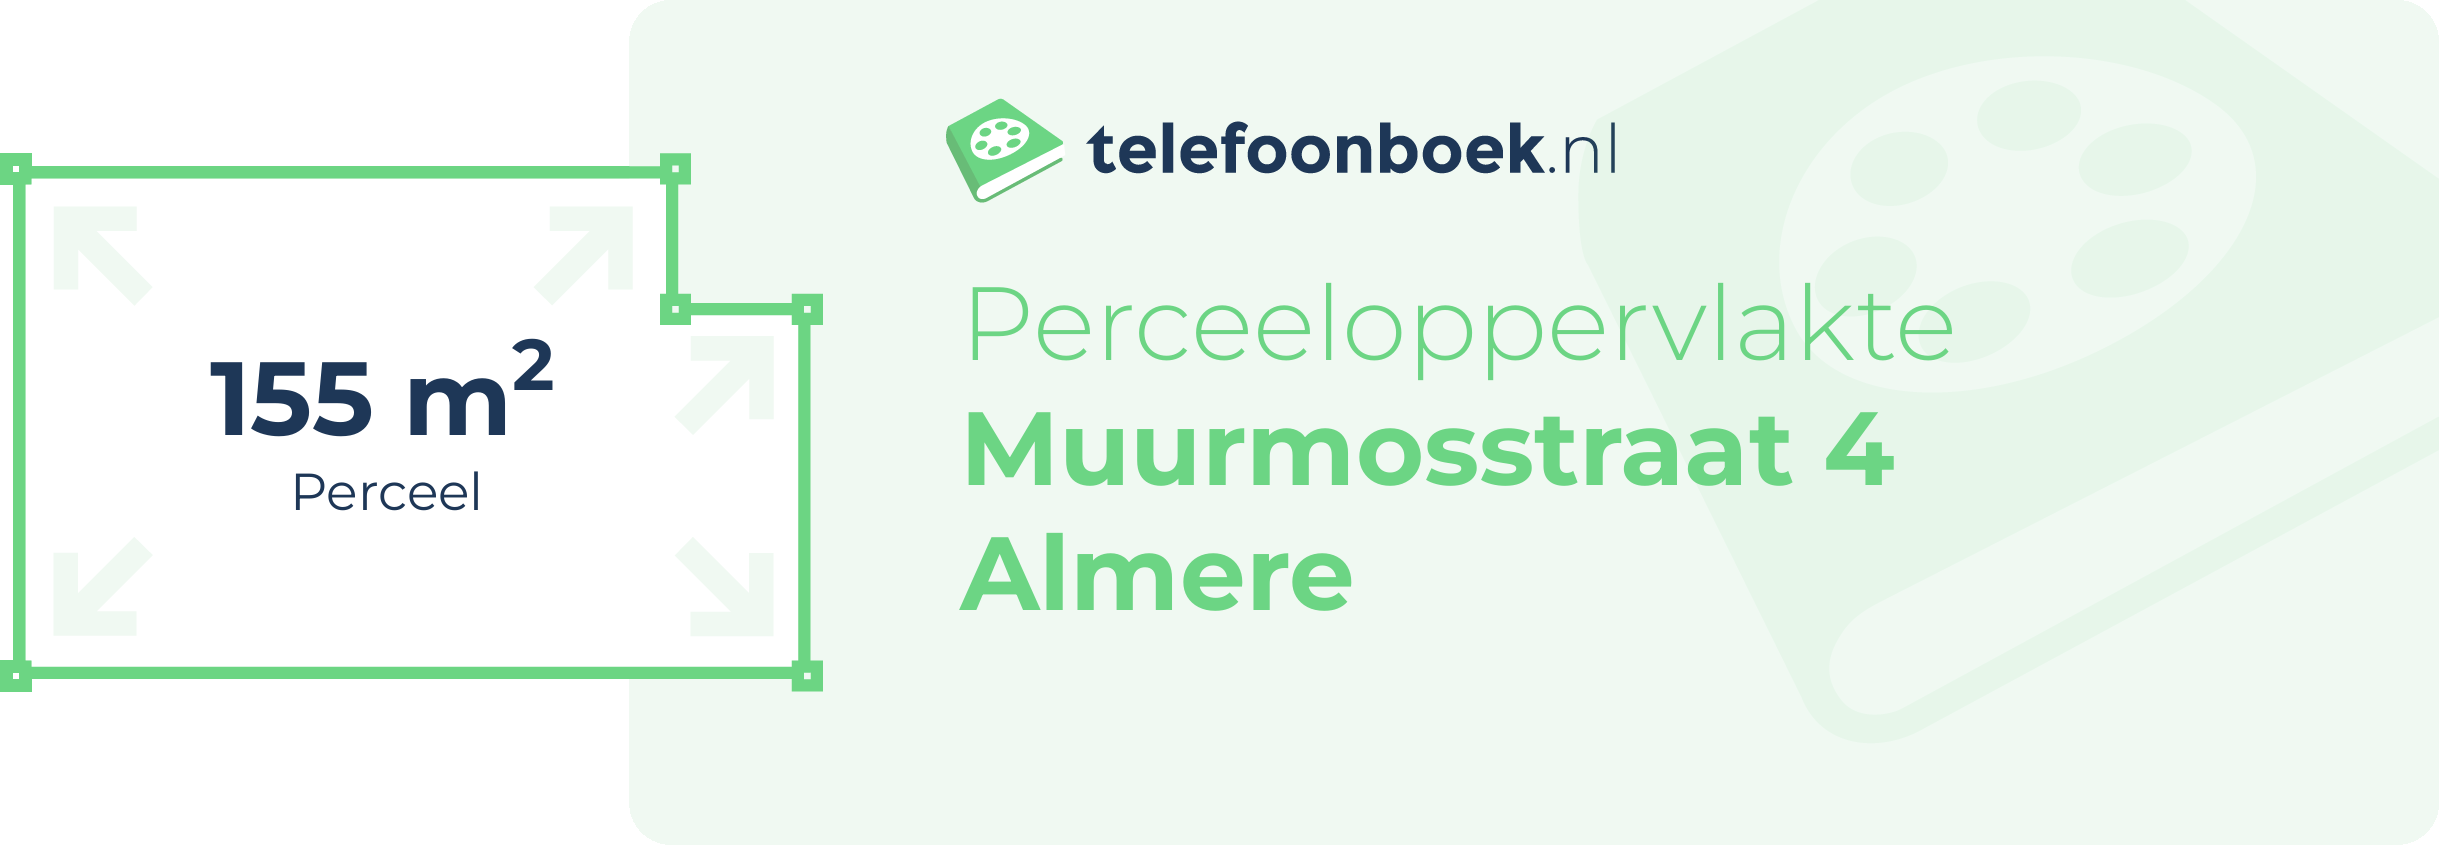 Perceeloppervlakte Muurmosstraat 4 Almere